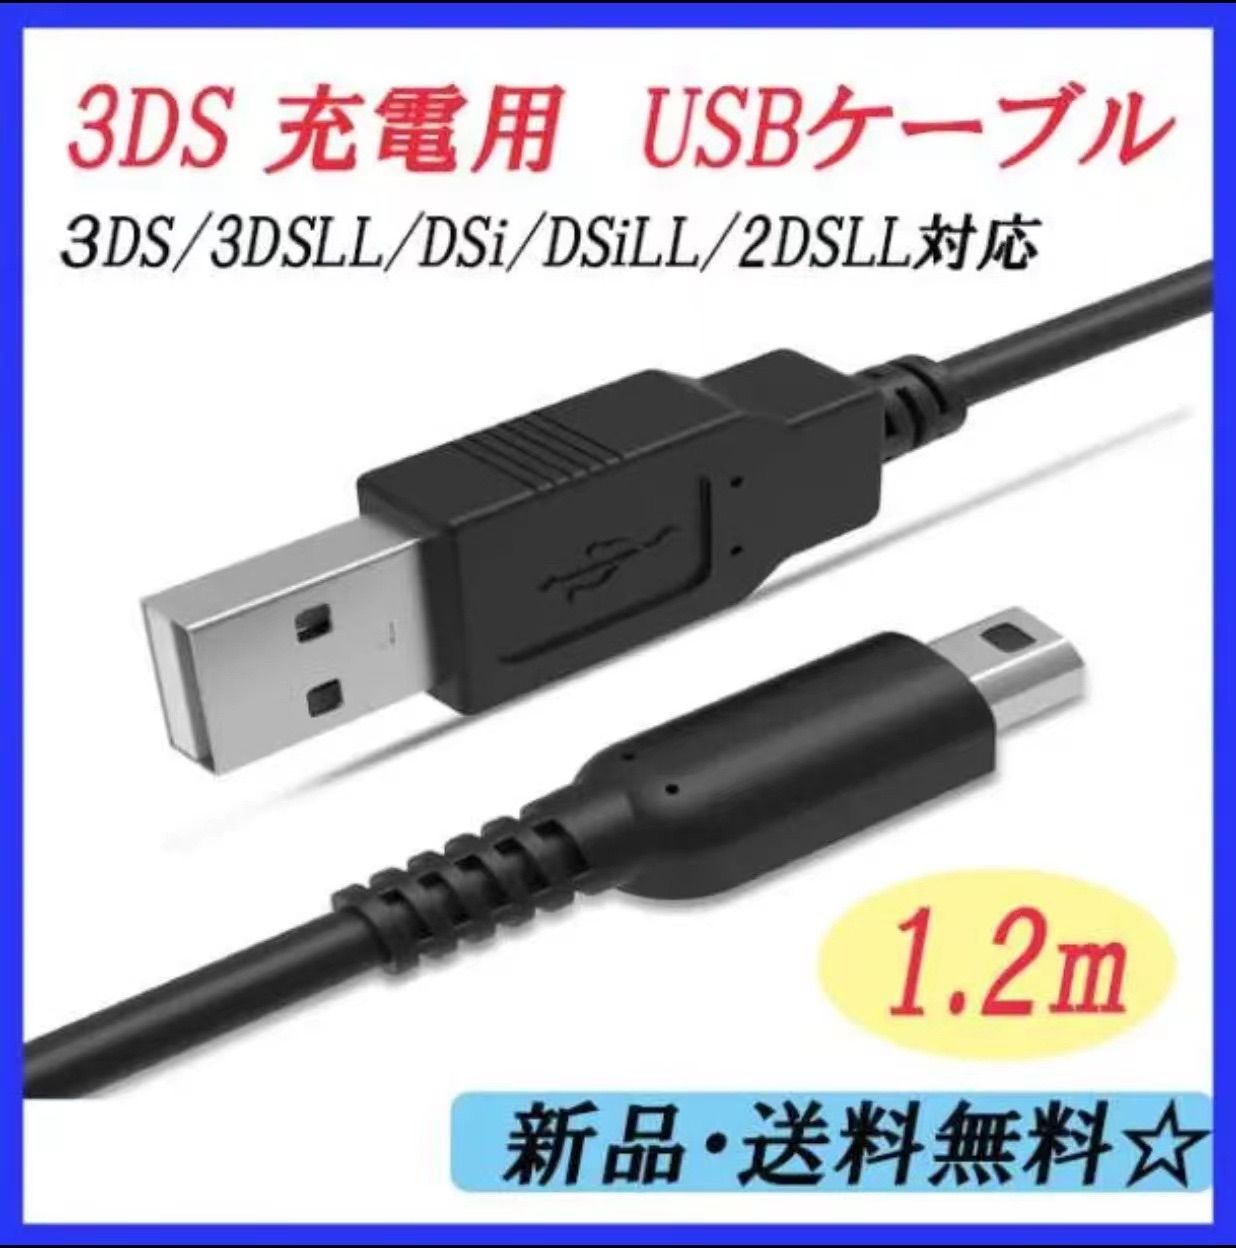 任天堂 3DS 2DS 充電ケーブル USB式 充電器 急速充電 1.2m